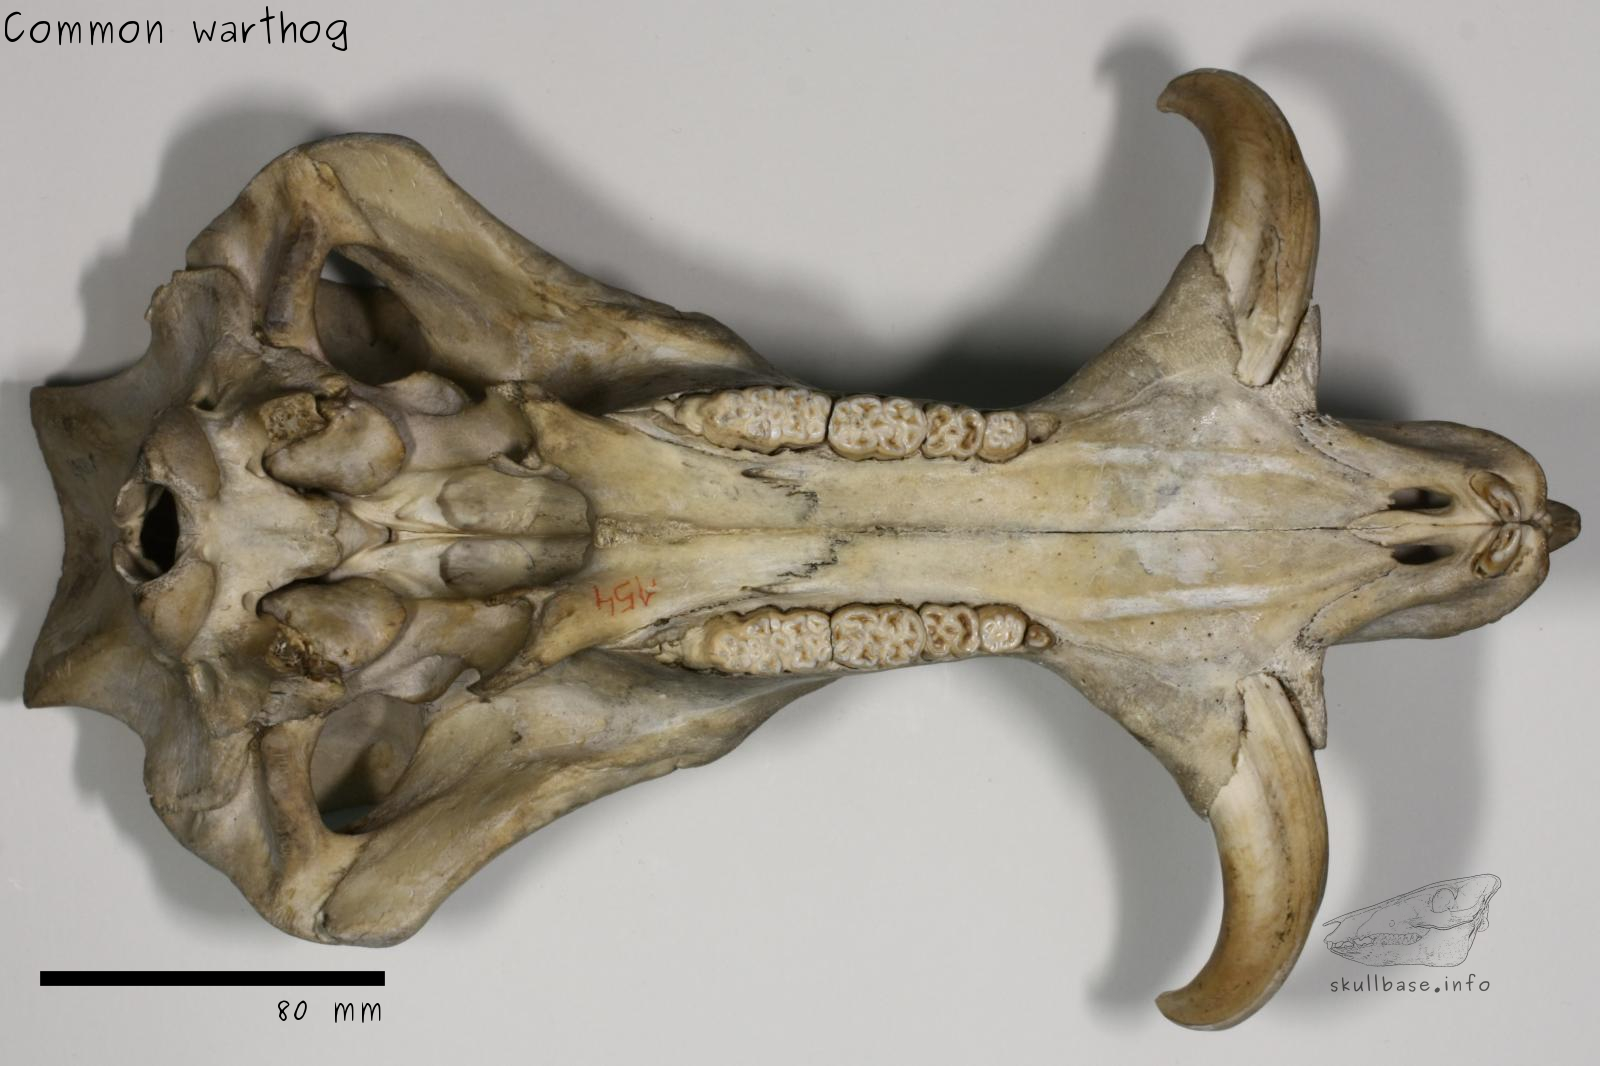 Common warthog (Phacochoerus africanus) skull ventral view